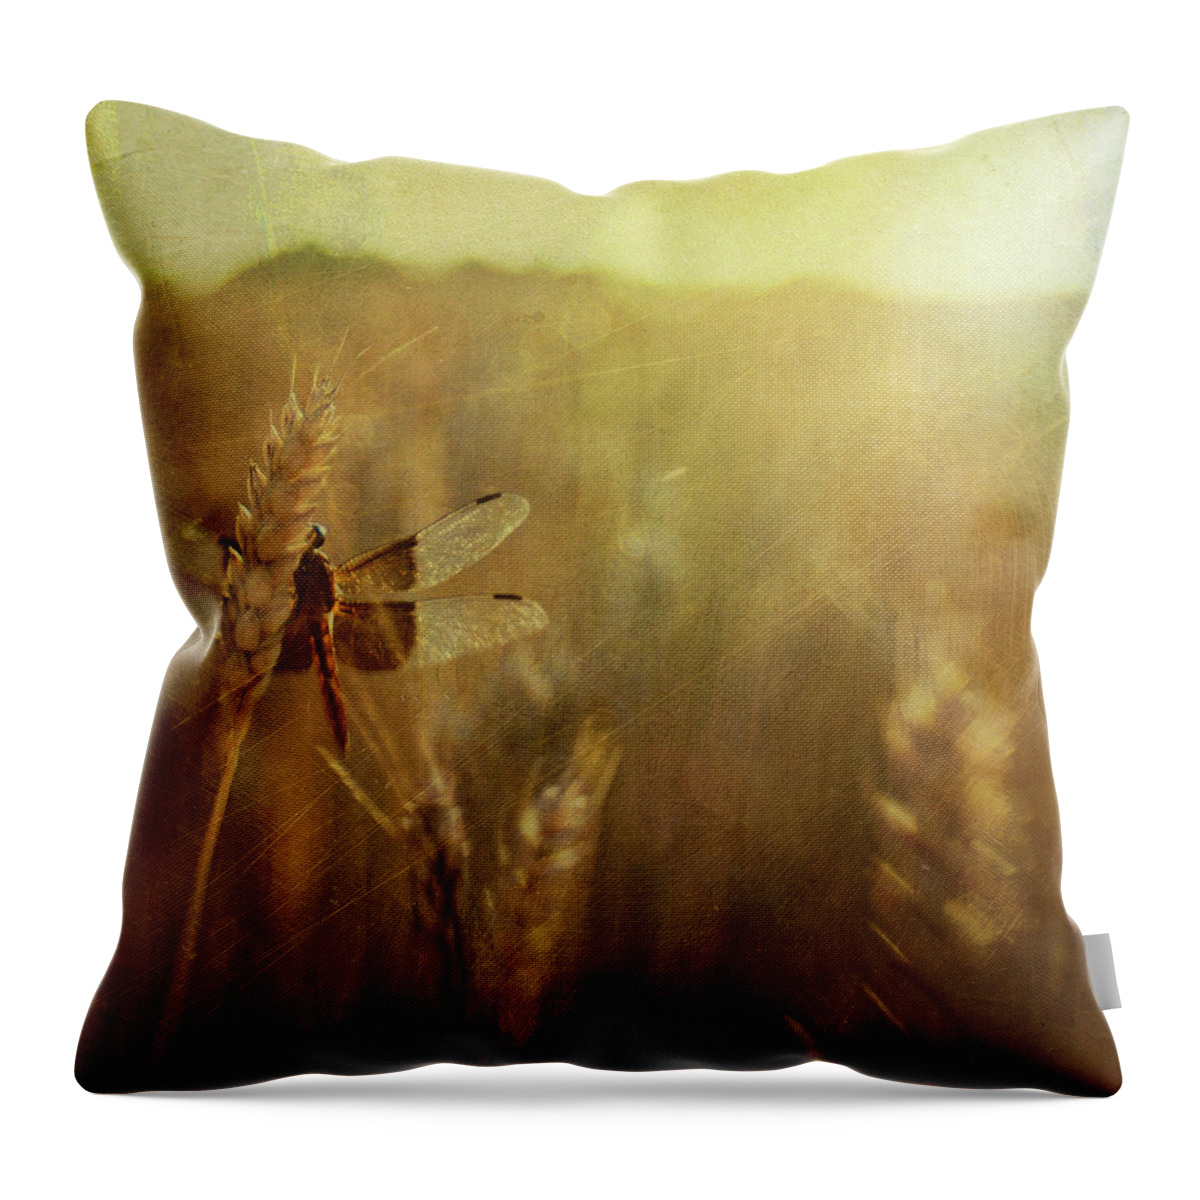 North Carolina Throw Pillow featuring the photograph Fragile Threads by Dawn D. Hanna